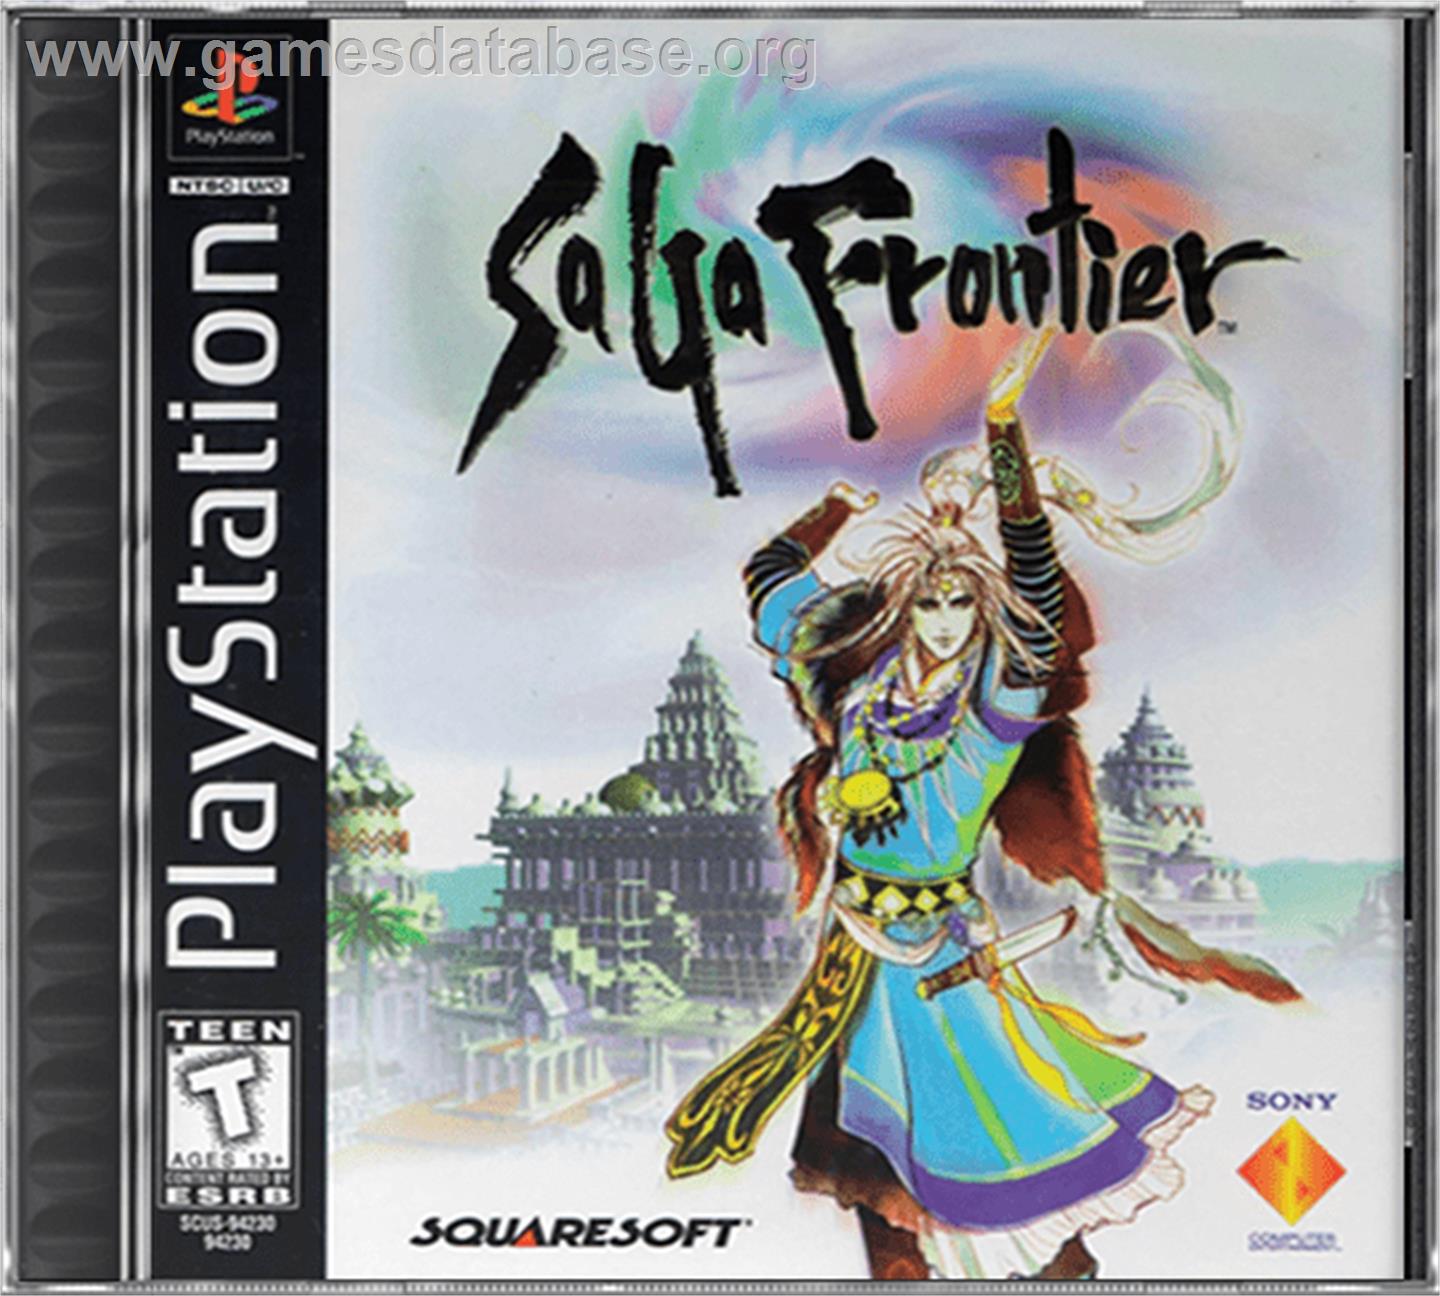 Saga Frontier - Sony Playstation - Artwork - Box